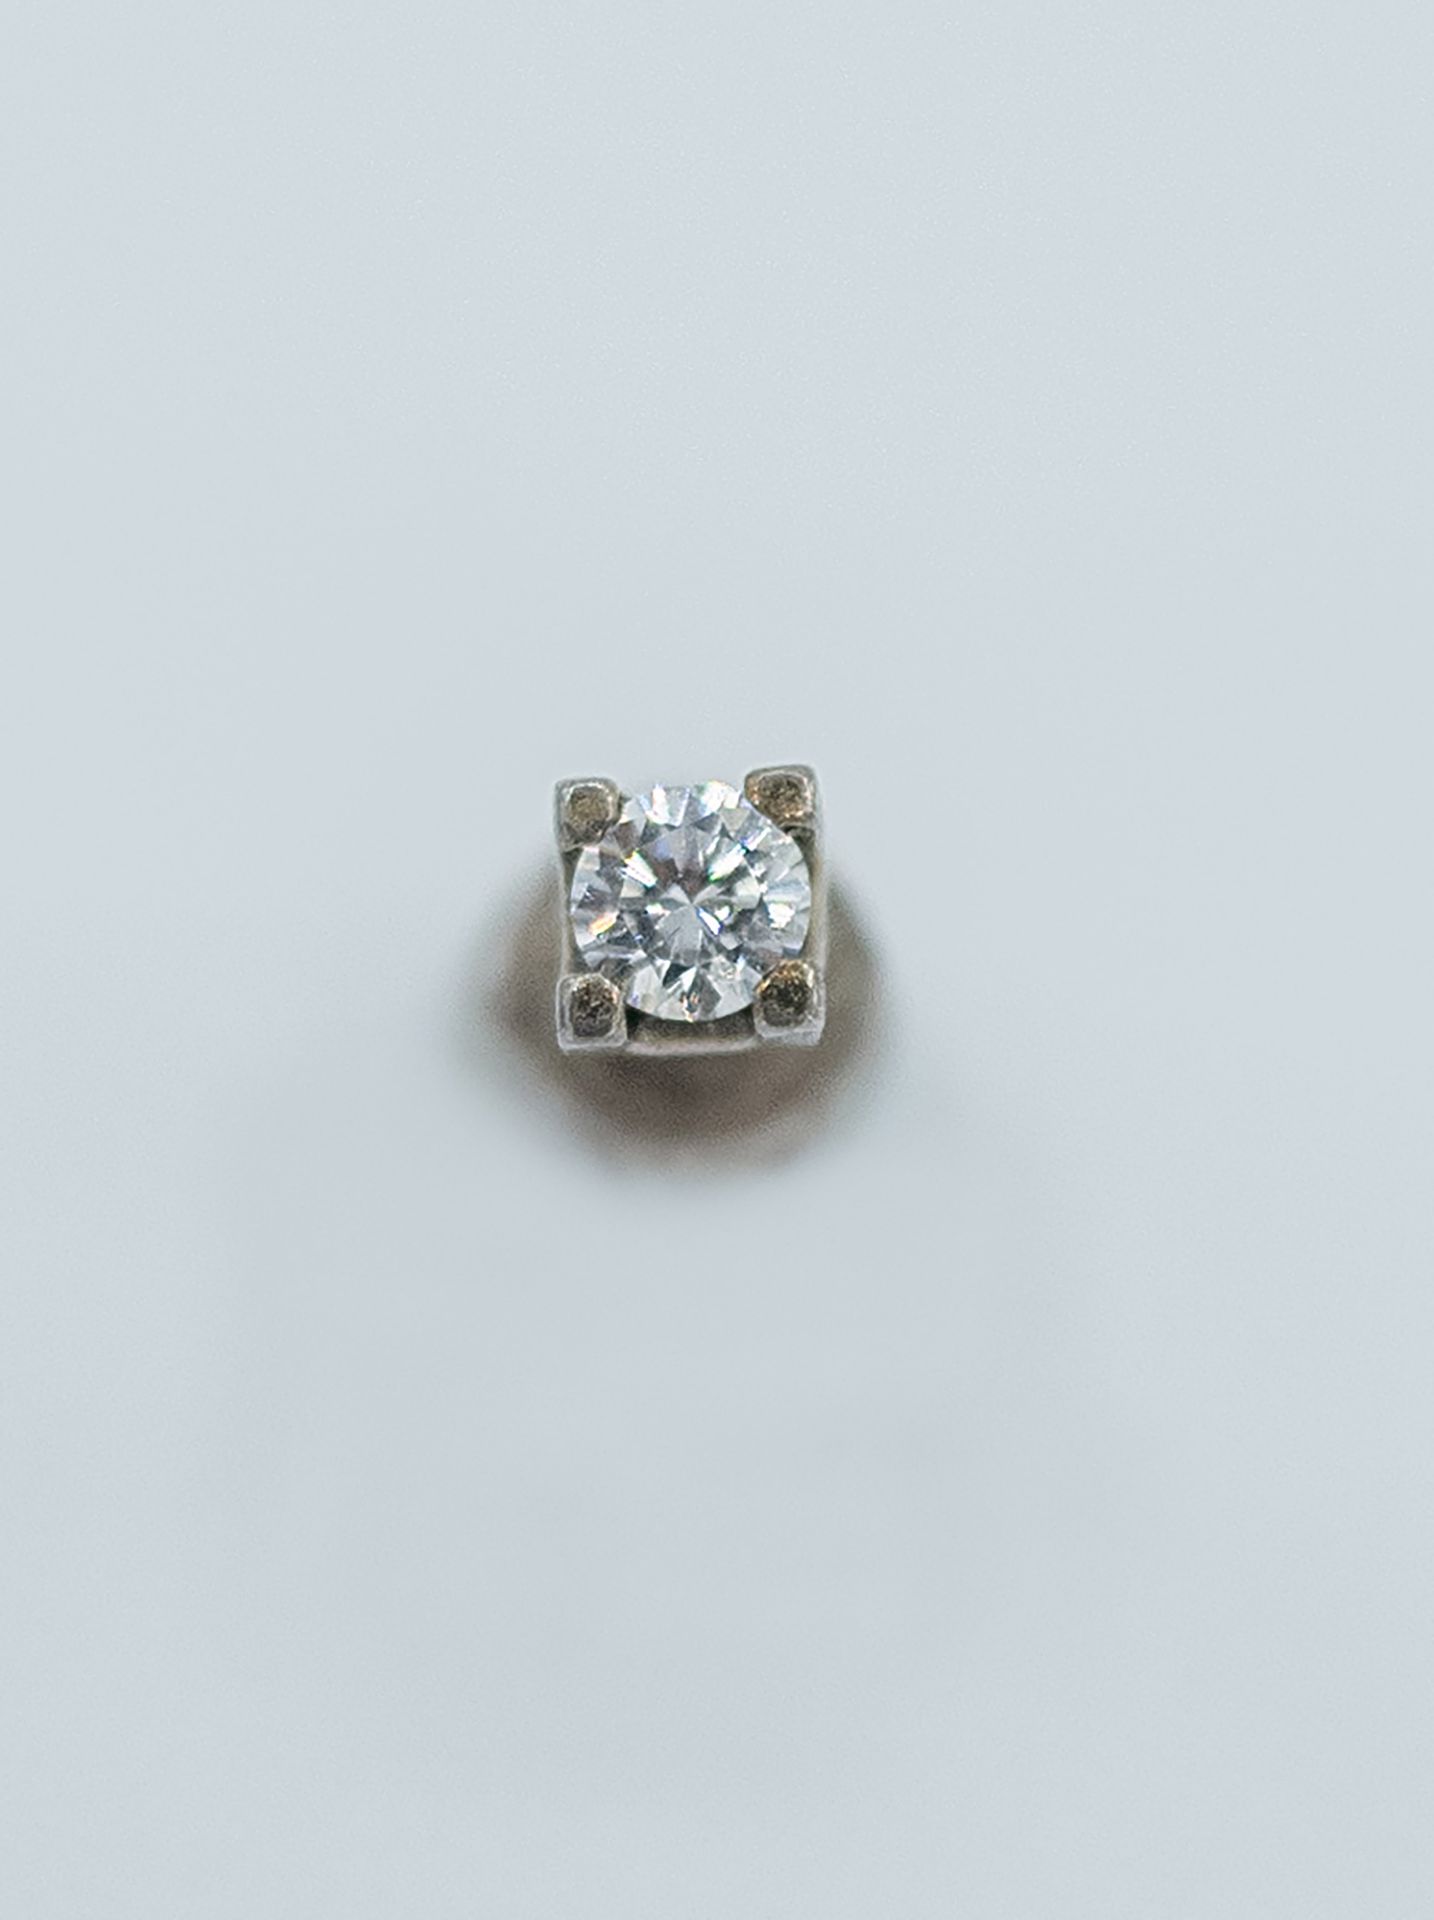 Two diamond stud earrings - Image 4 of 5